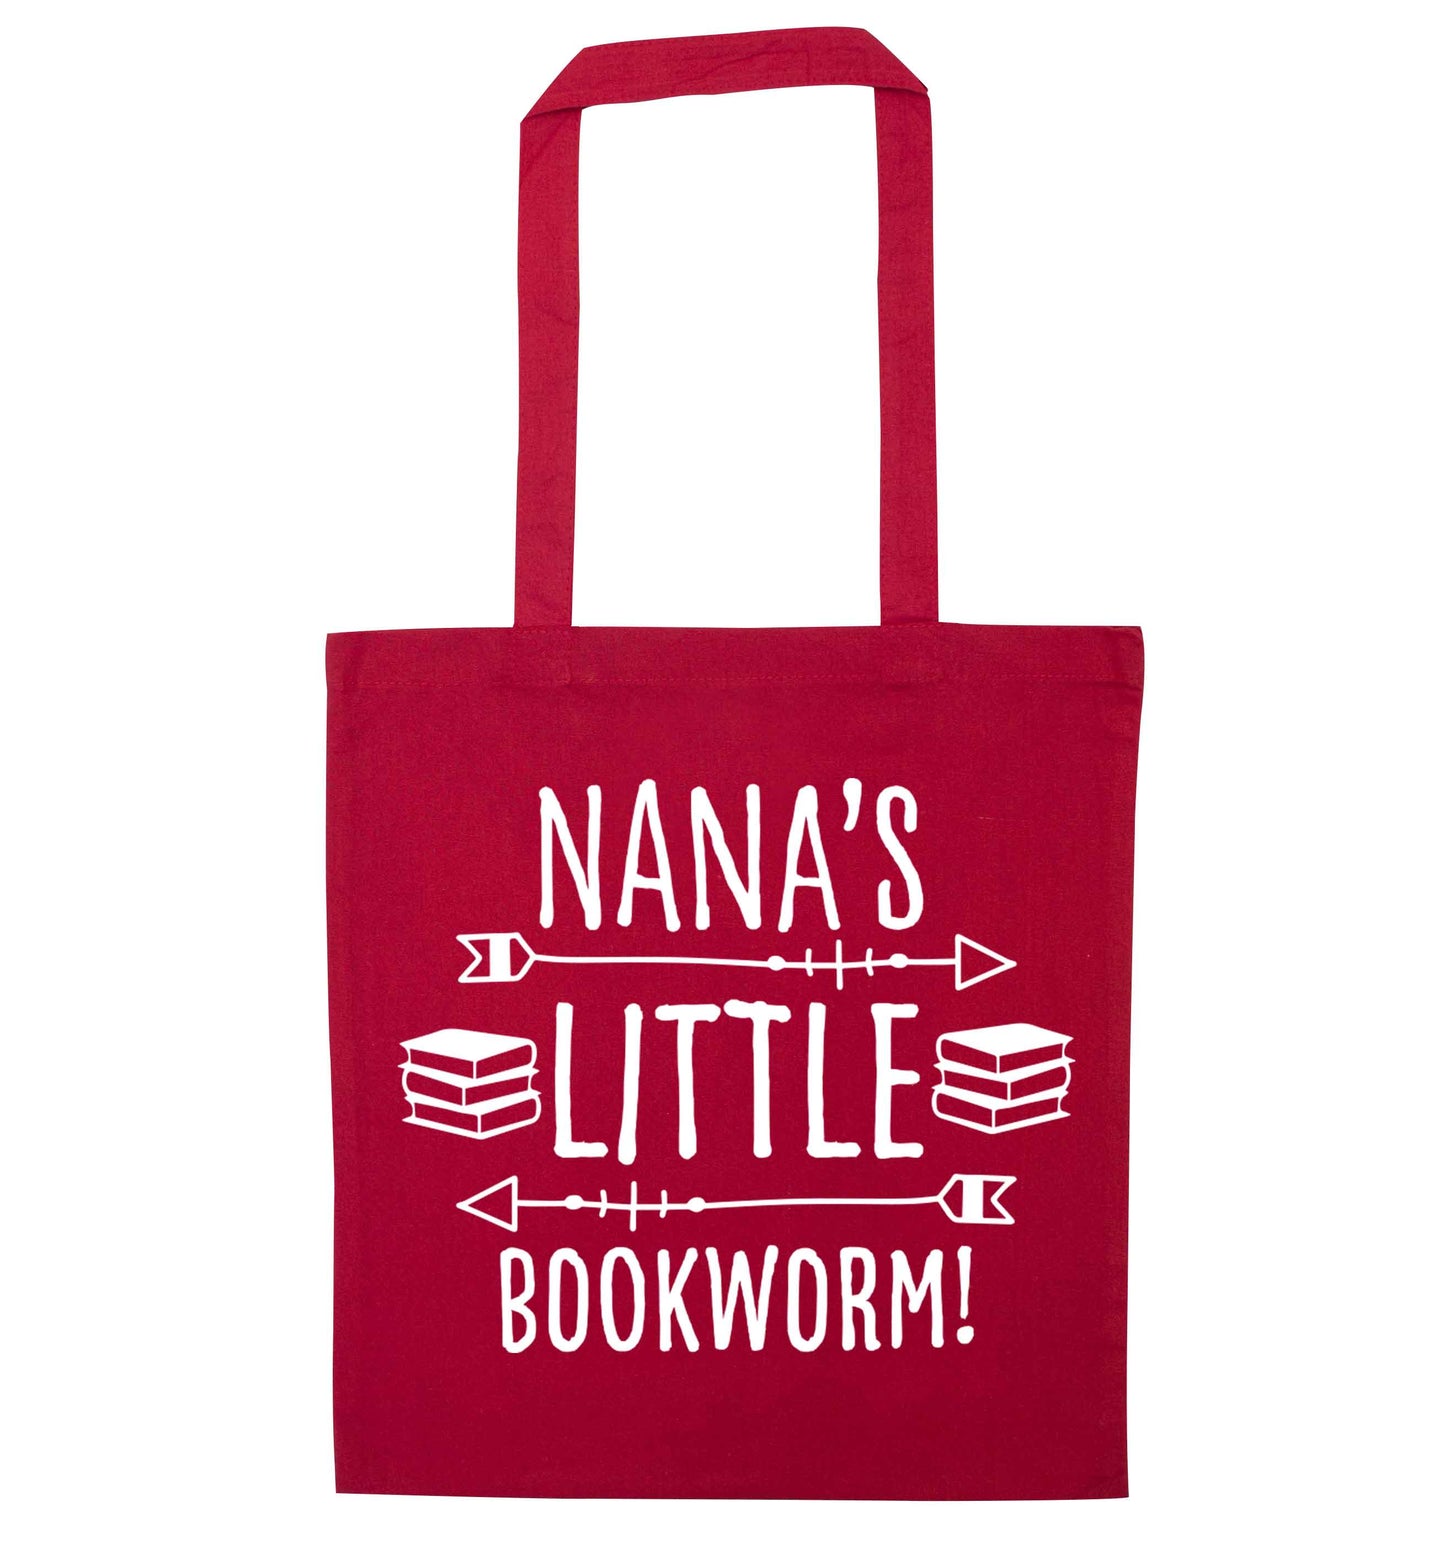 Nana's little bookworm red tote bag